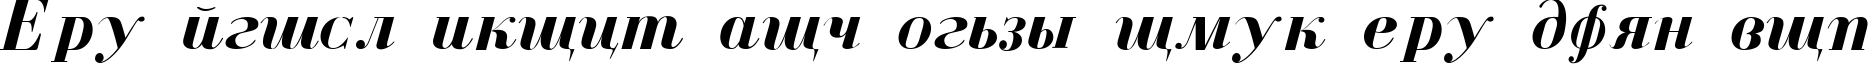 Пример написания шрифтом Bold-Italic текста на английском